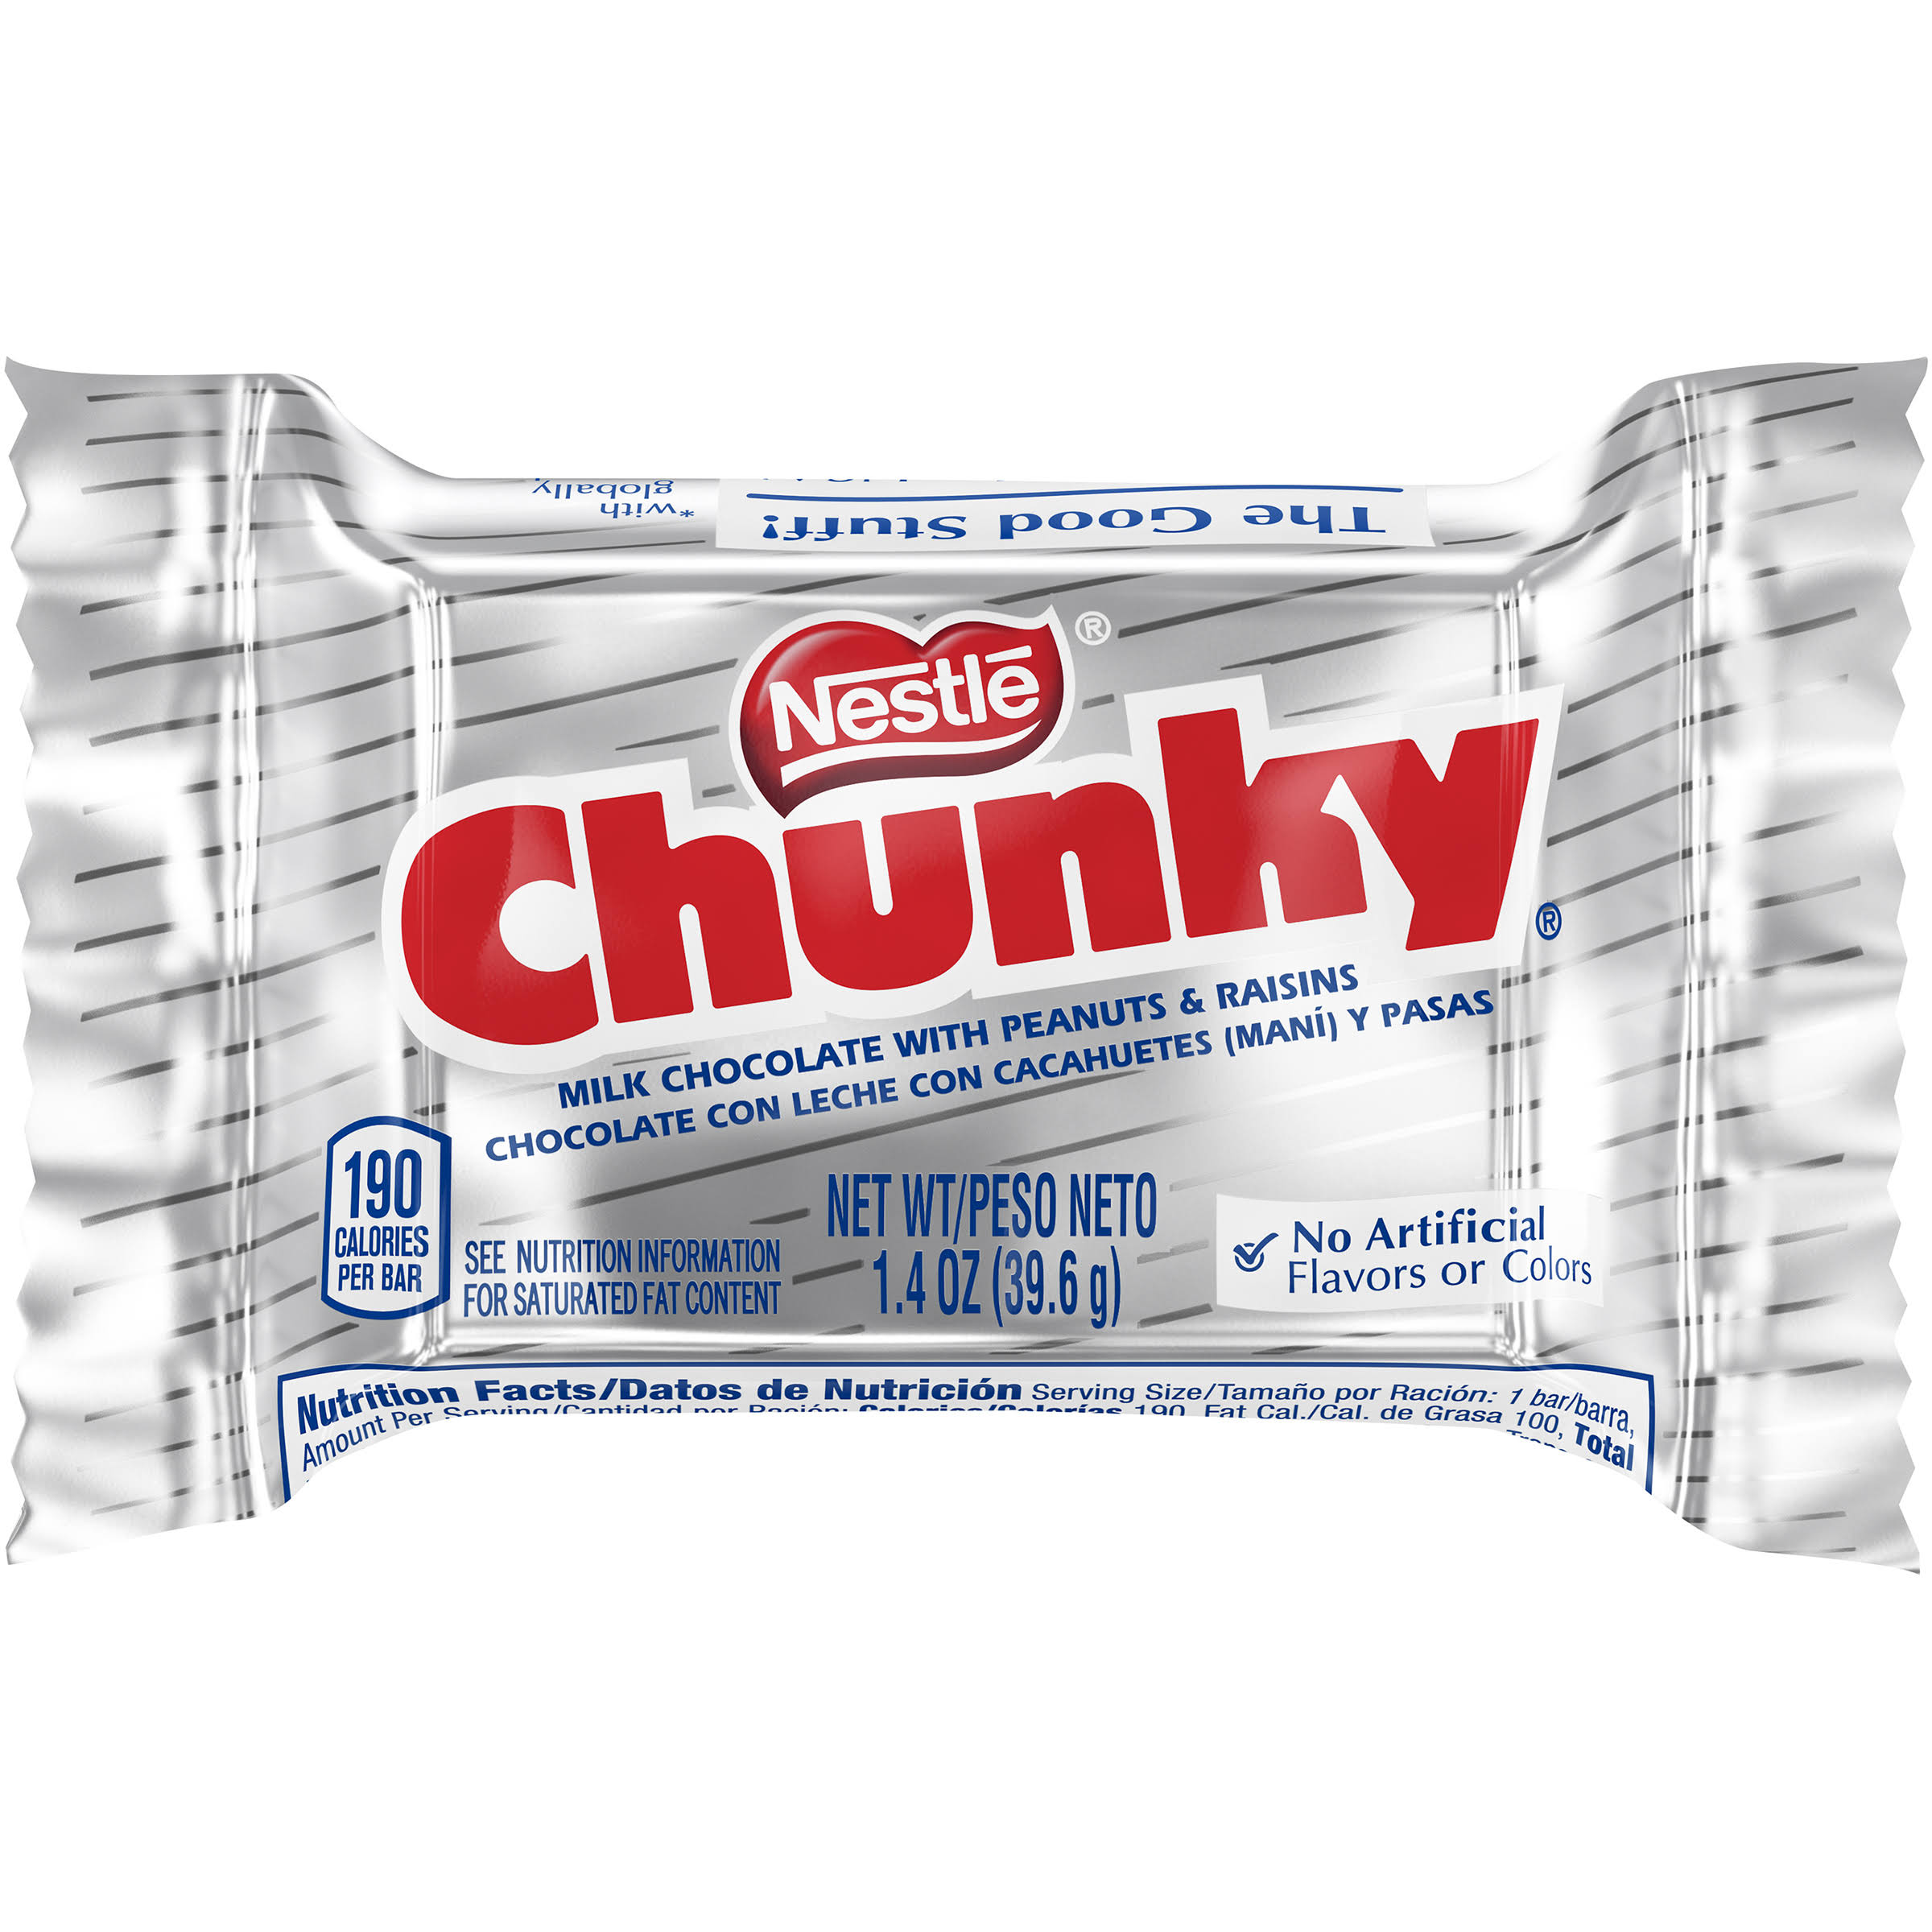 Nestle Chunky Milk Chocolate Bar